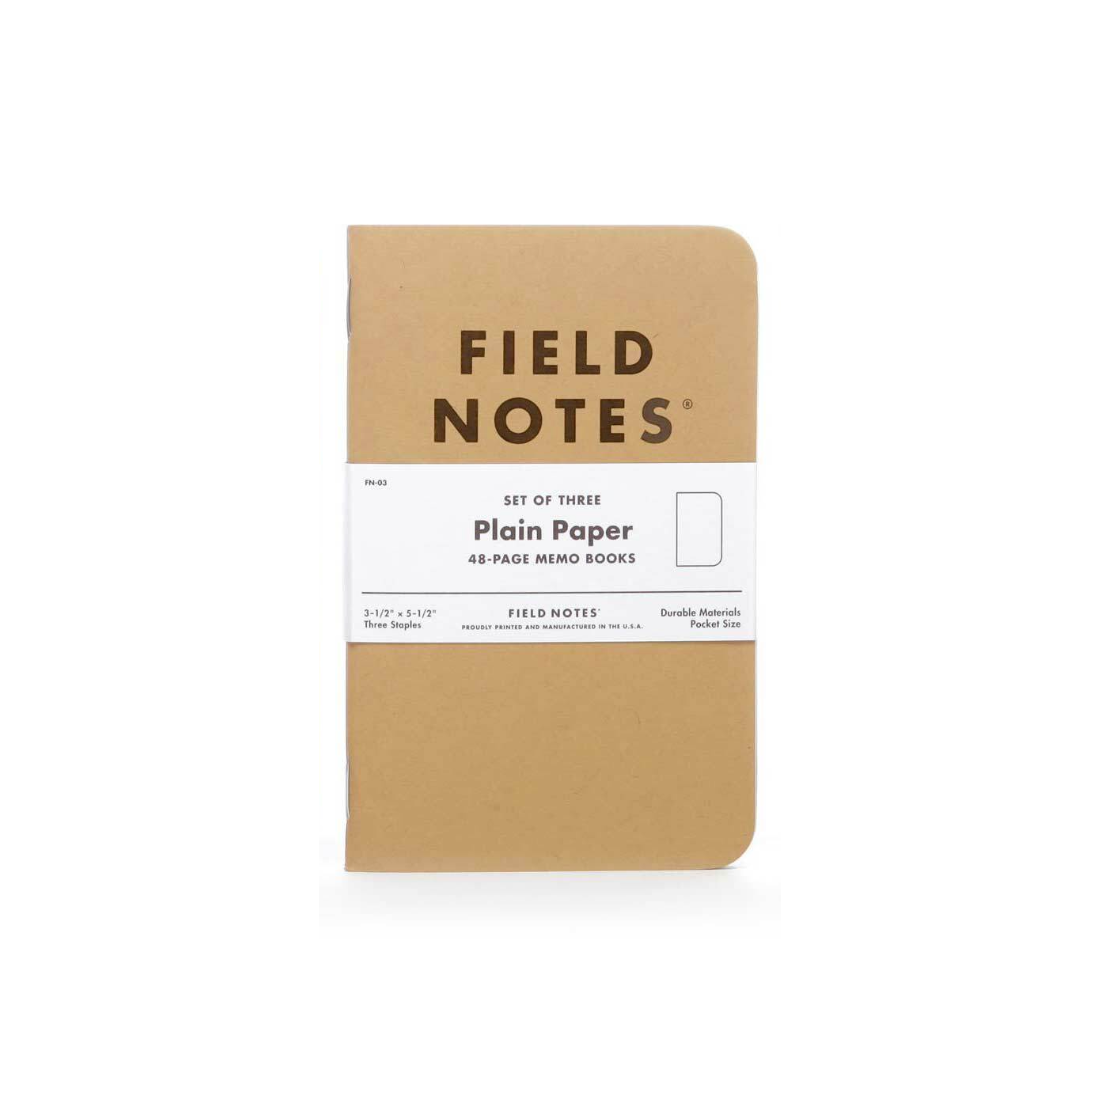 Field Notes 3-PACK Original Kraft Notebooks (Plane Paper)